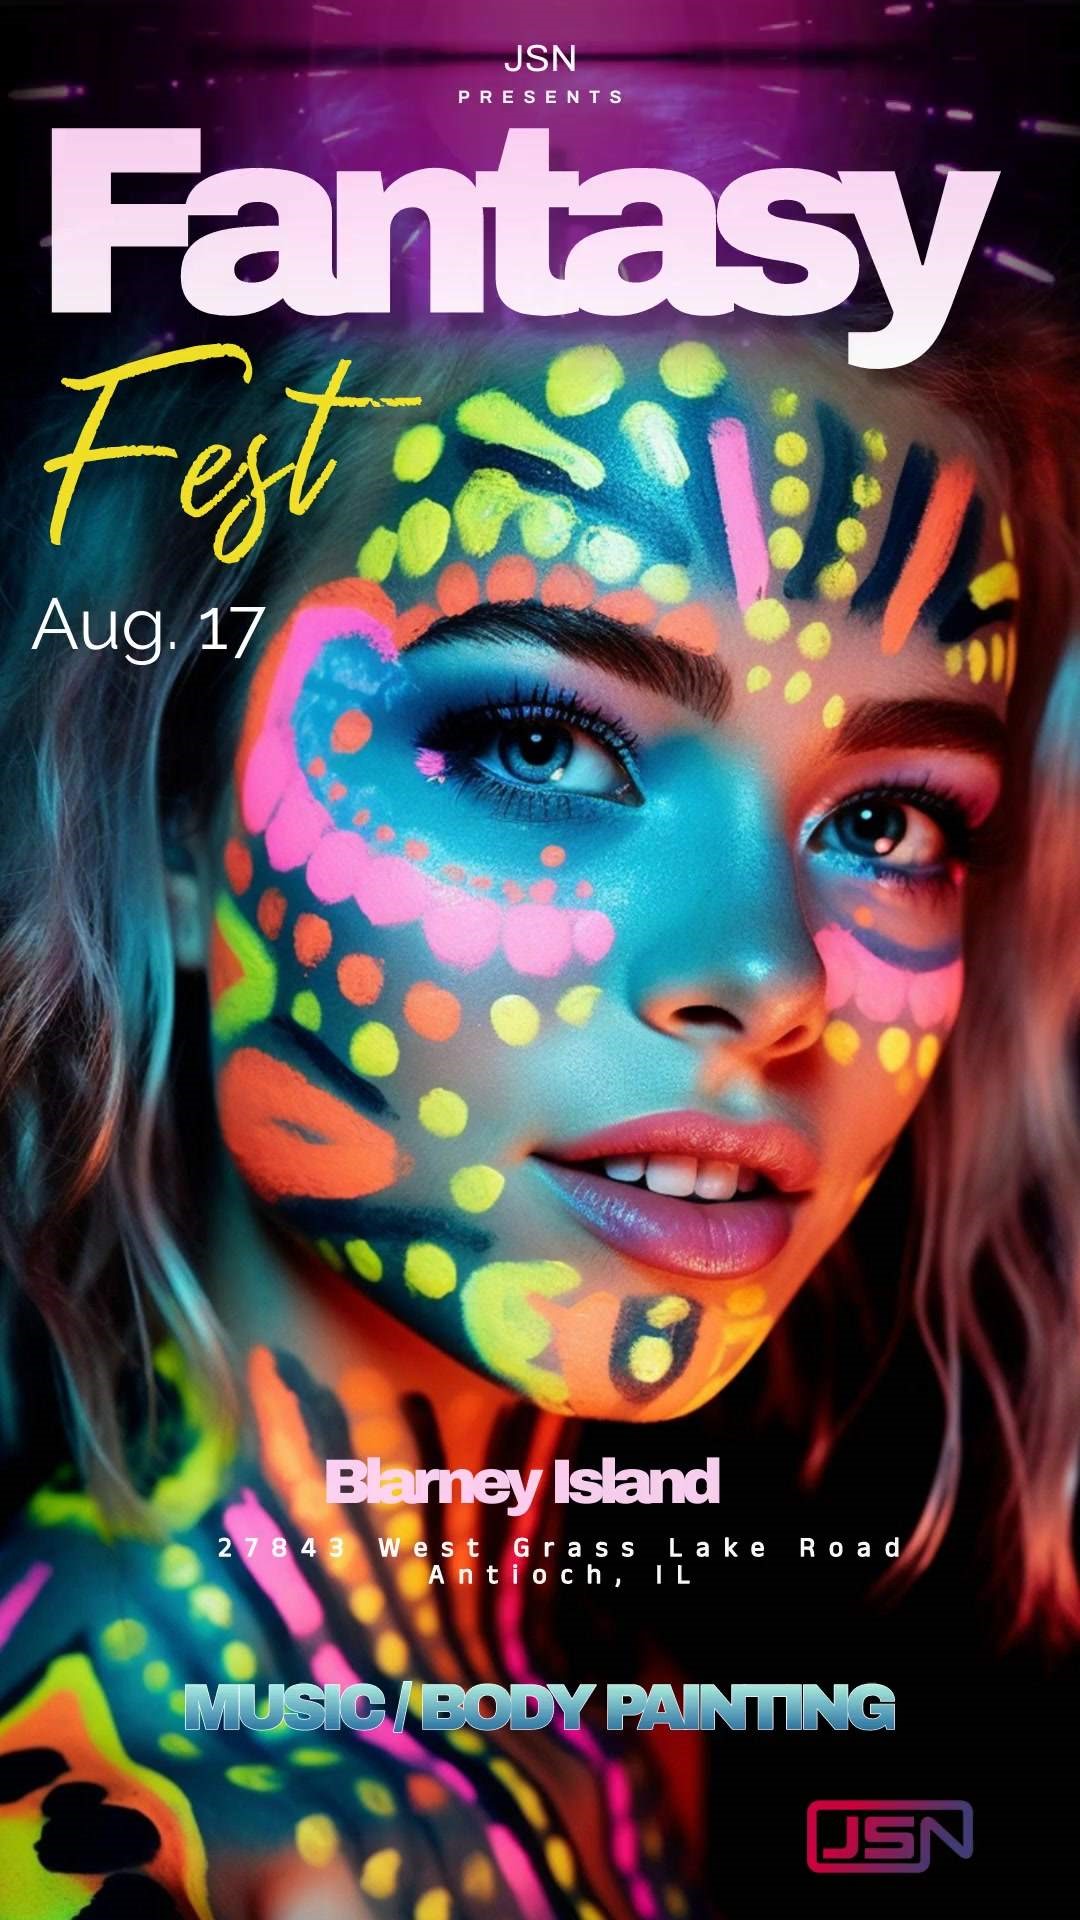 JSN invades Blarney Island Jen's Birthday / Fantasy Fest on août 17, 14:00@Blarney Island - Achetez des billets et obtenez des informations surJen's Social Networking 